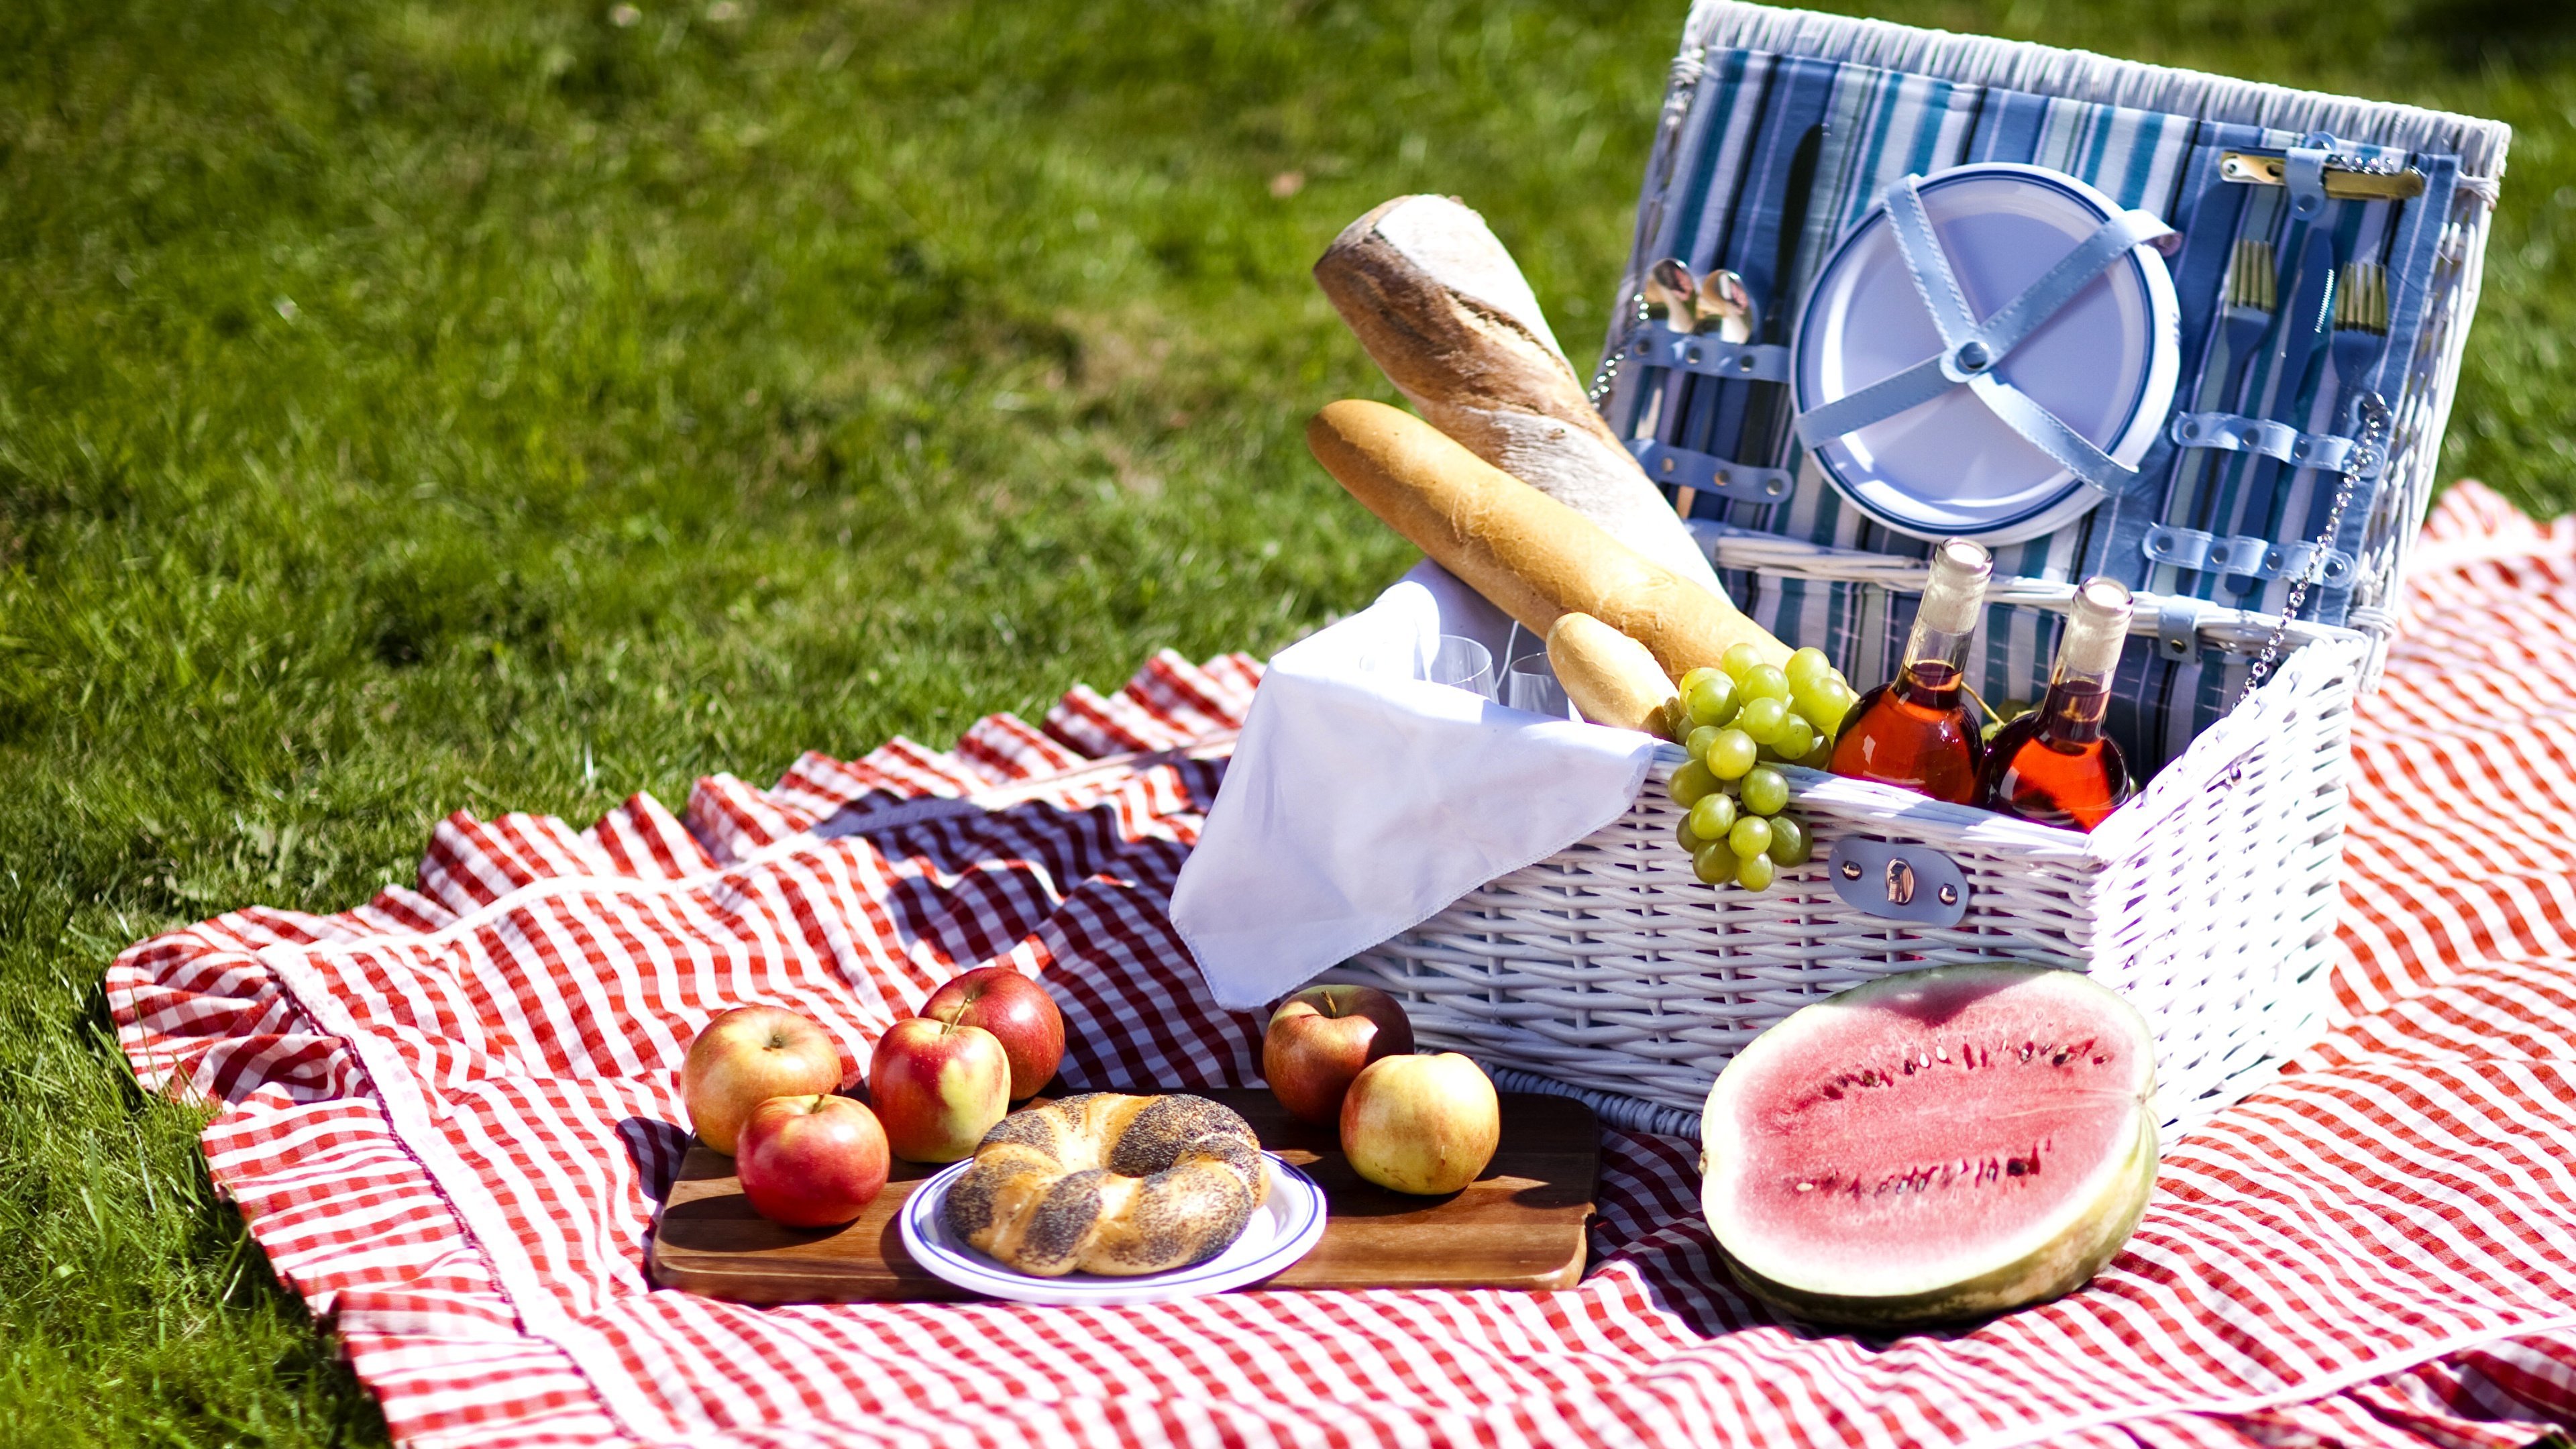 Авито пикнике. Корзинка для пикника на природе. Пикник на природе. Фотосессия с корзиной для пикника. Корзина для пикника с едой.